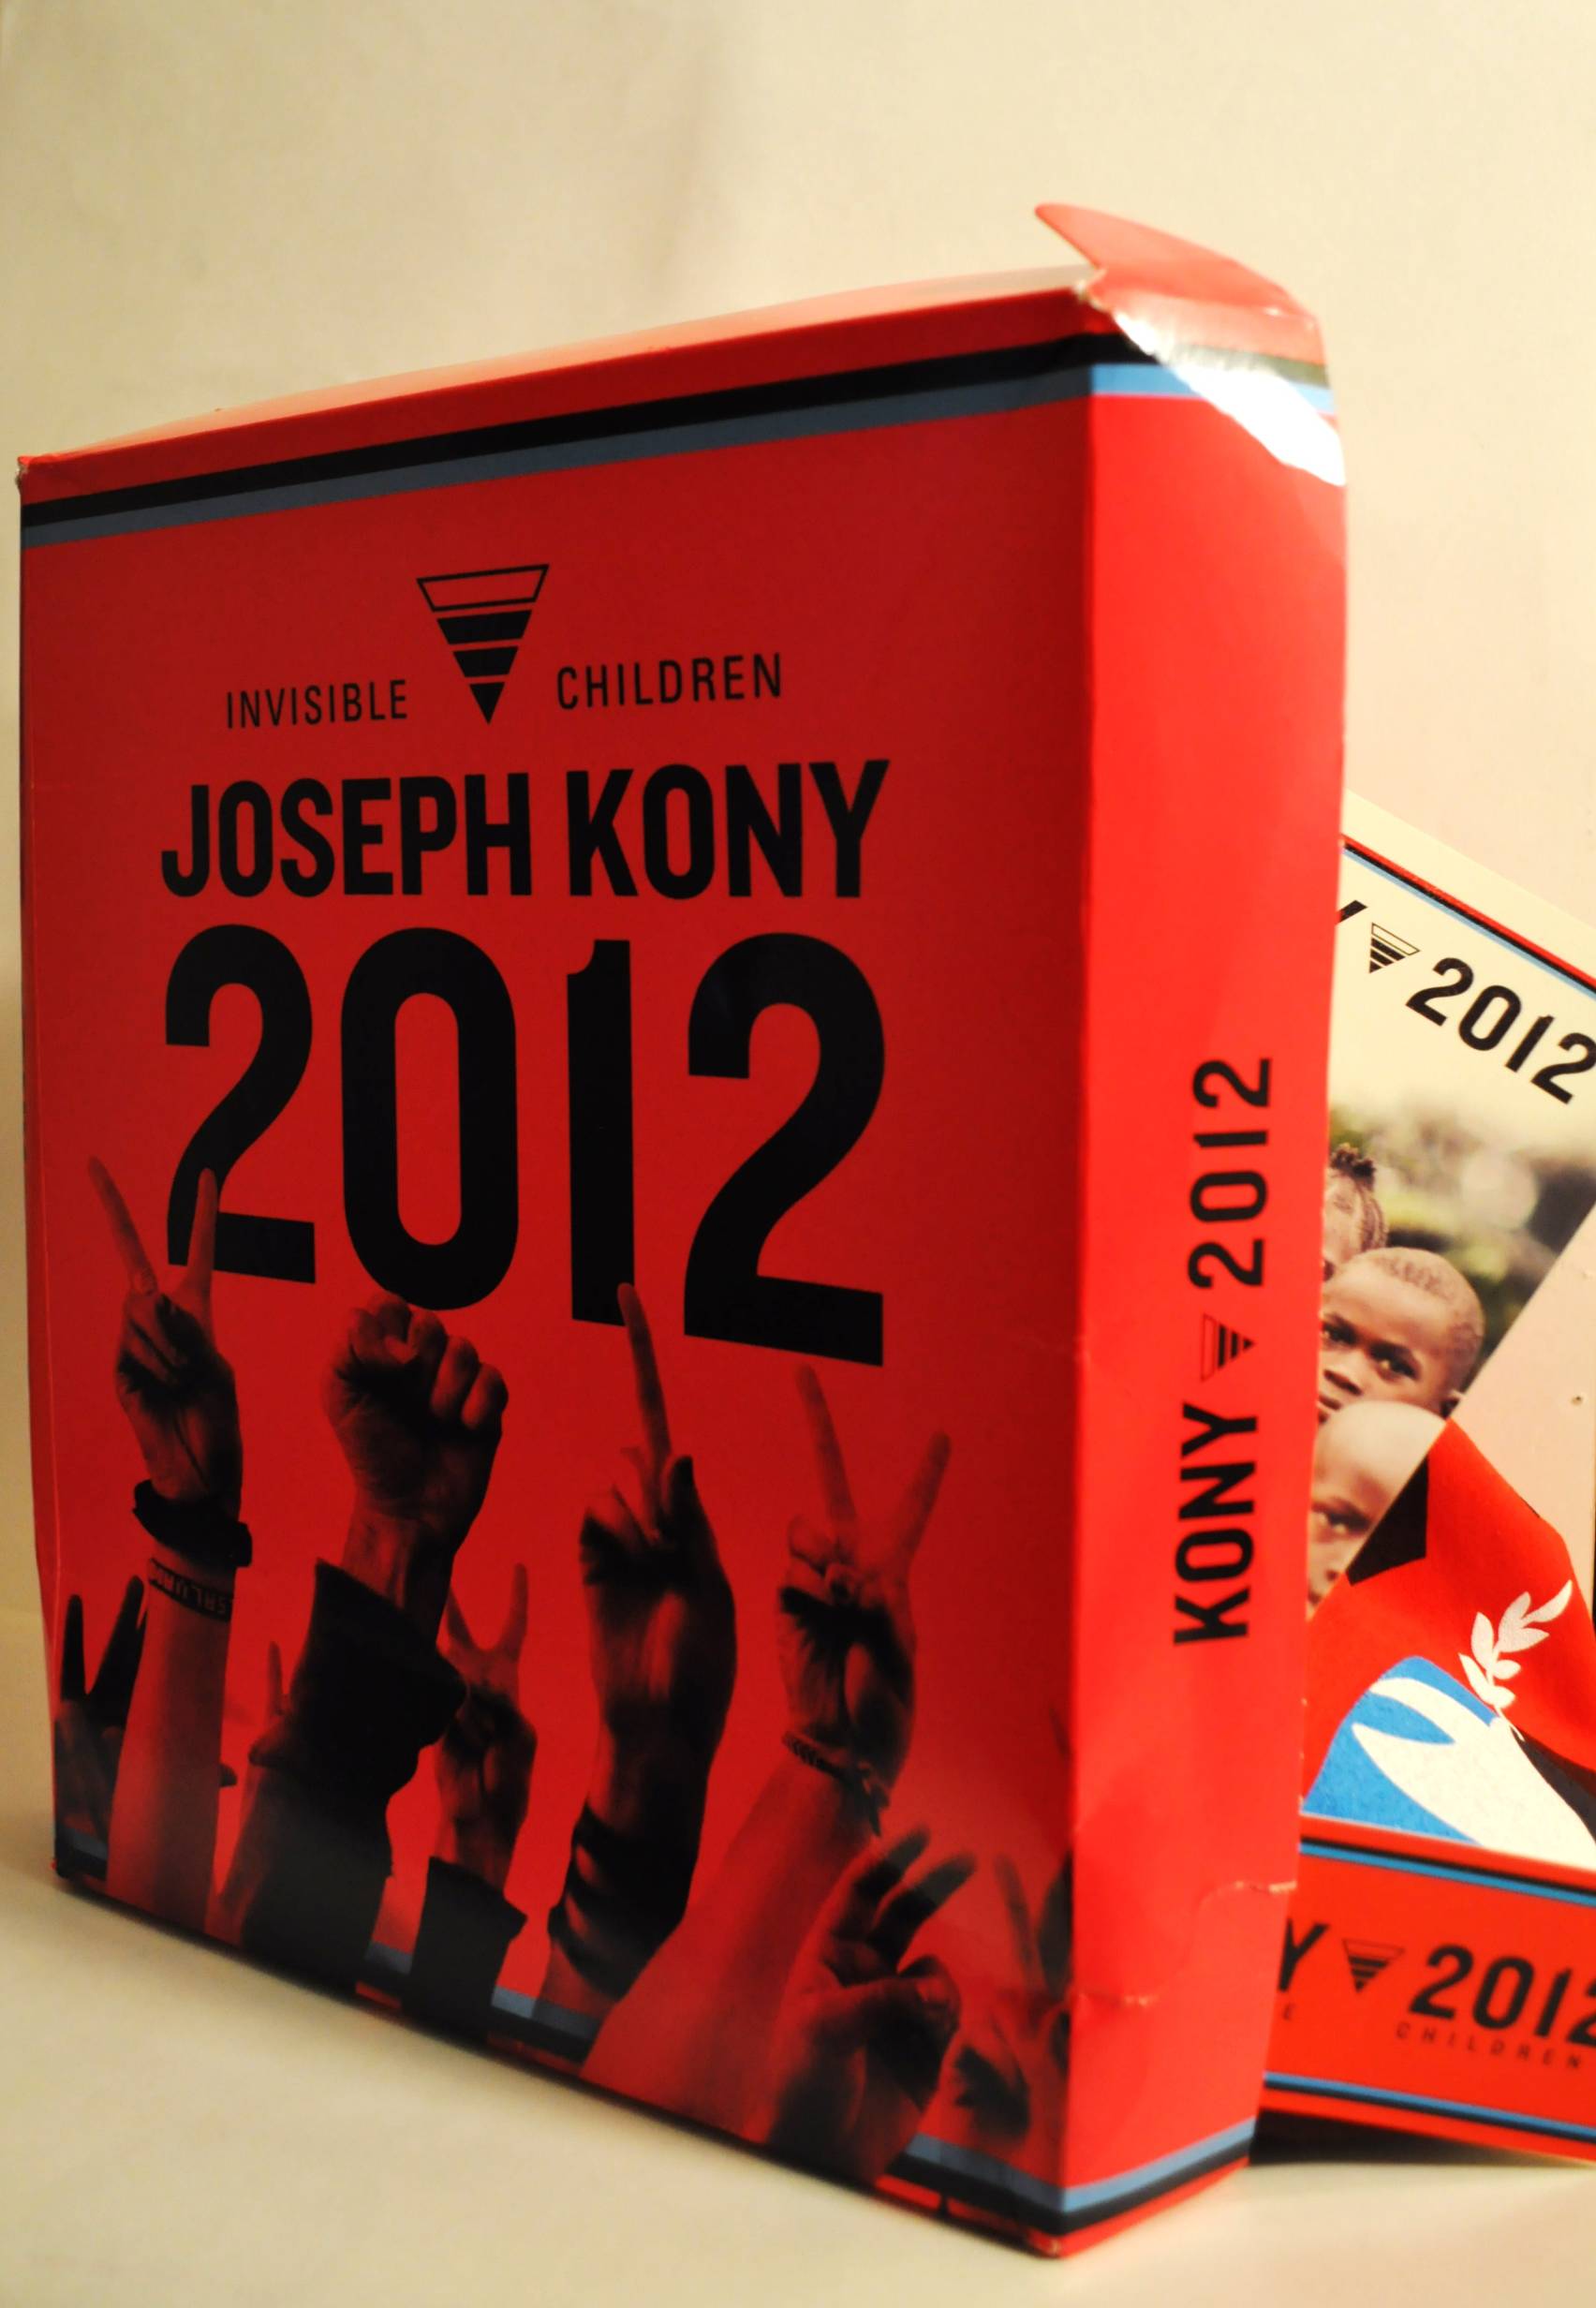 KONY 2012 arrives in Champaign-Urbana